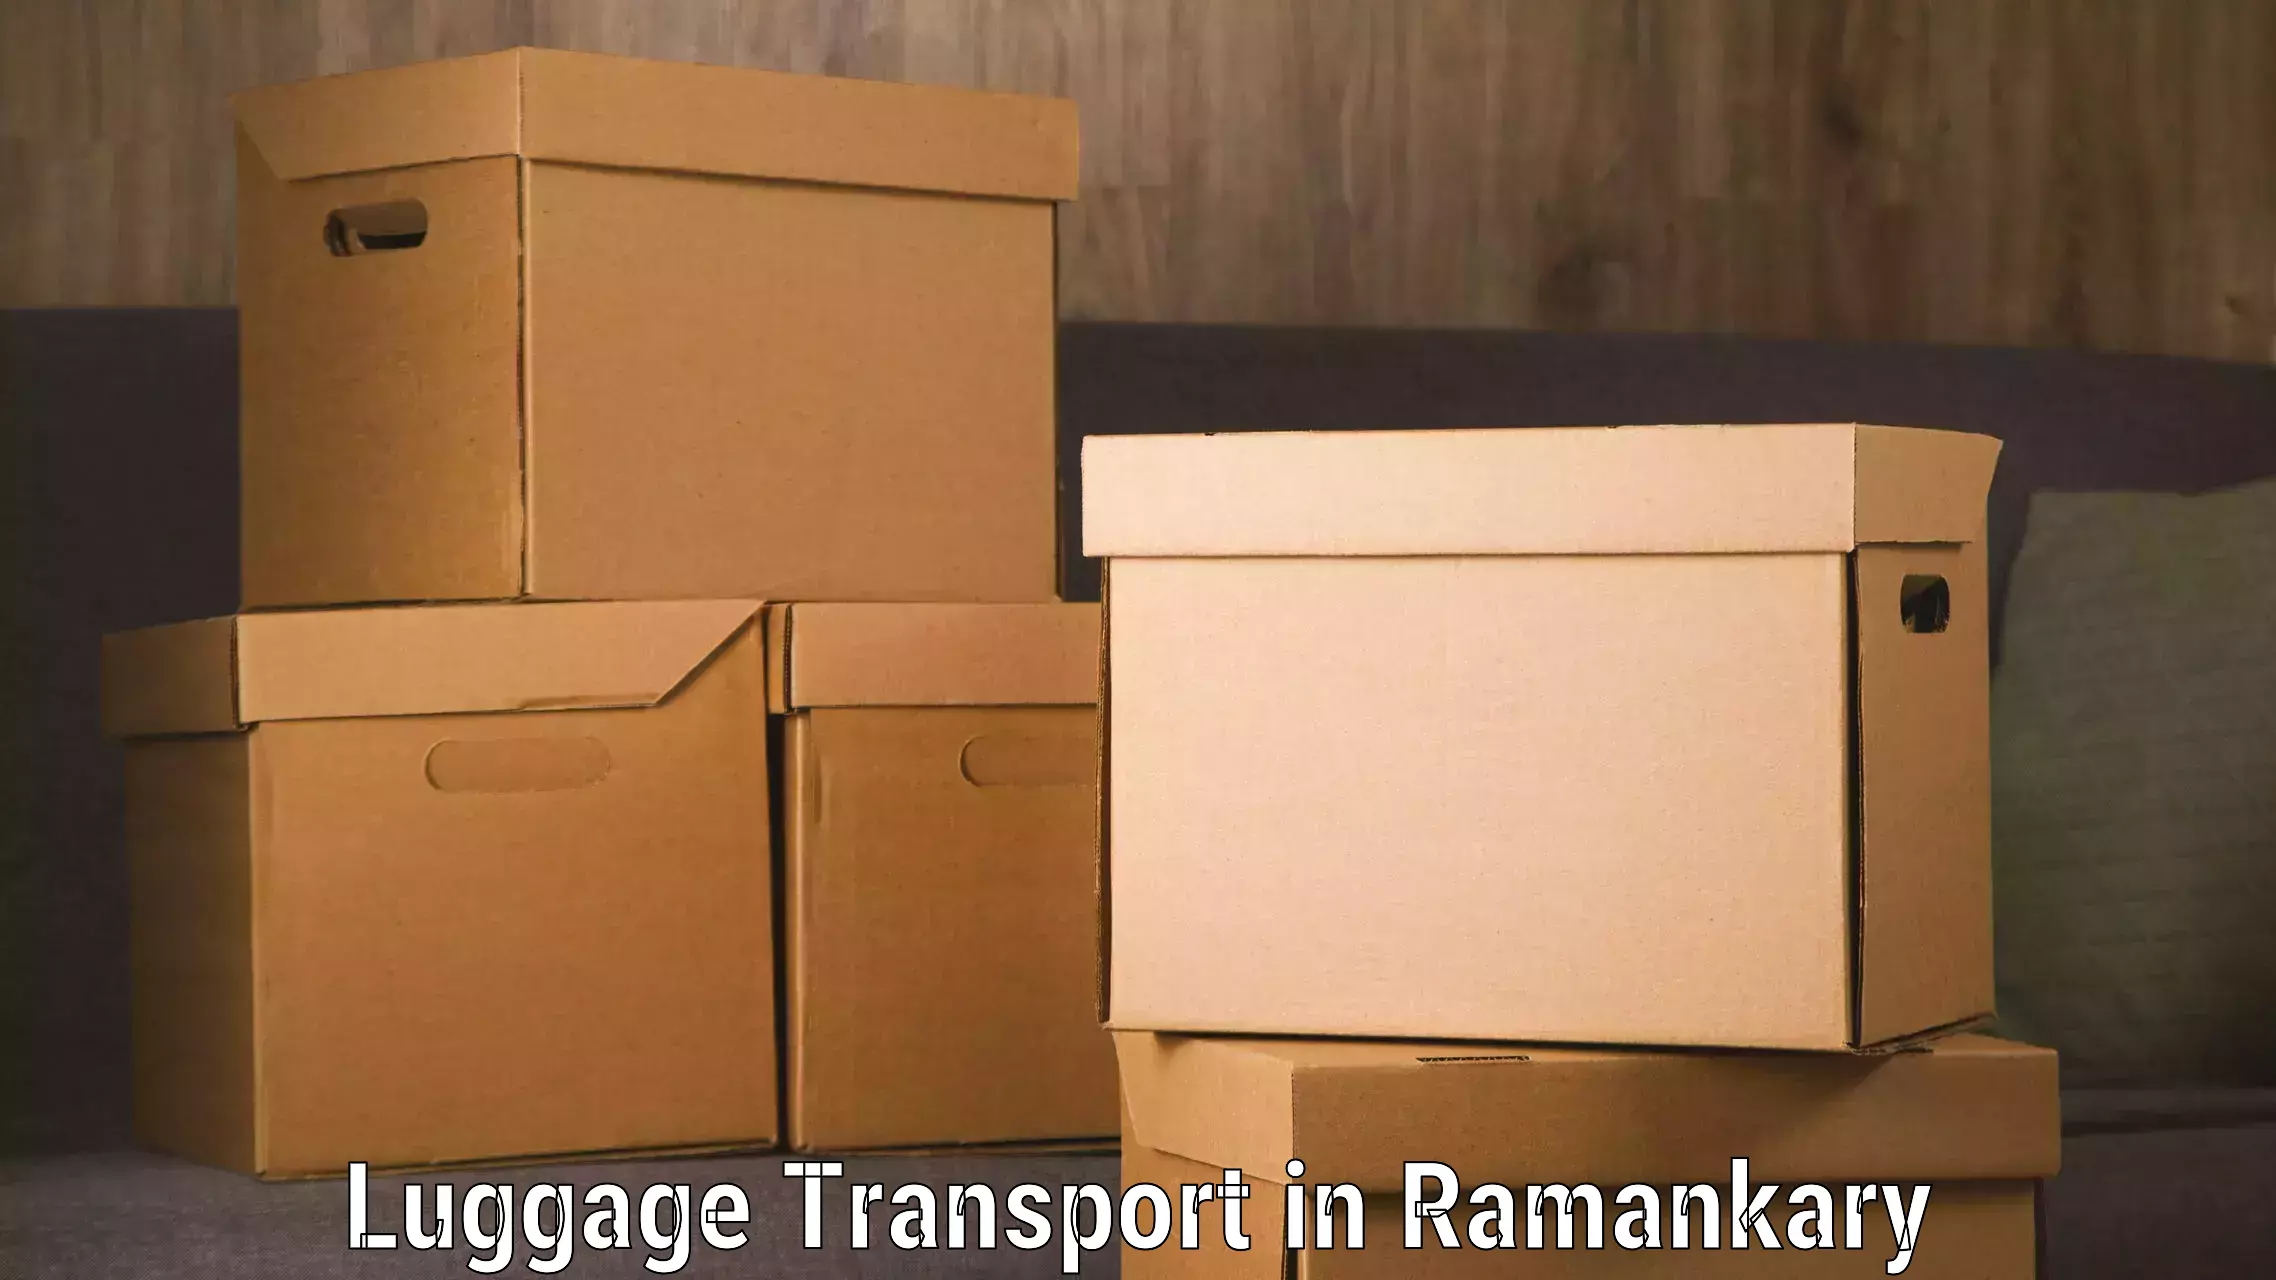 Urgent luggage shipment in Ramankary